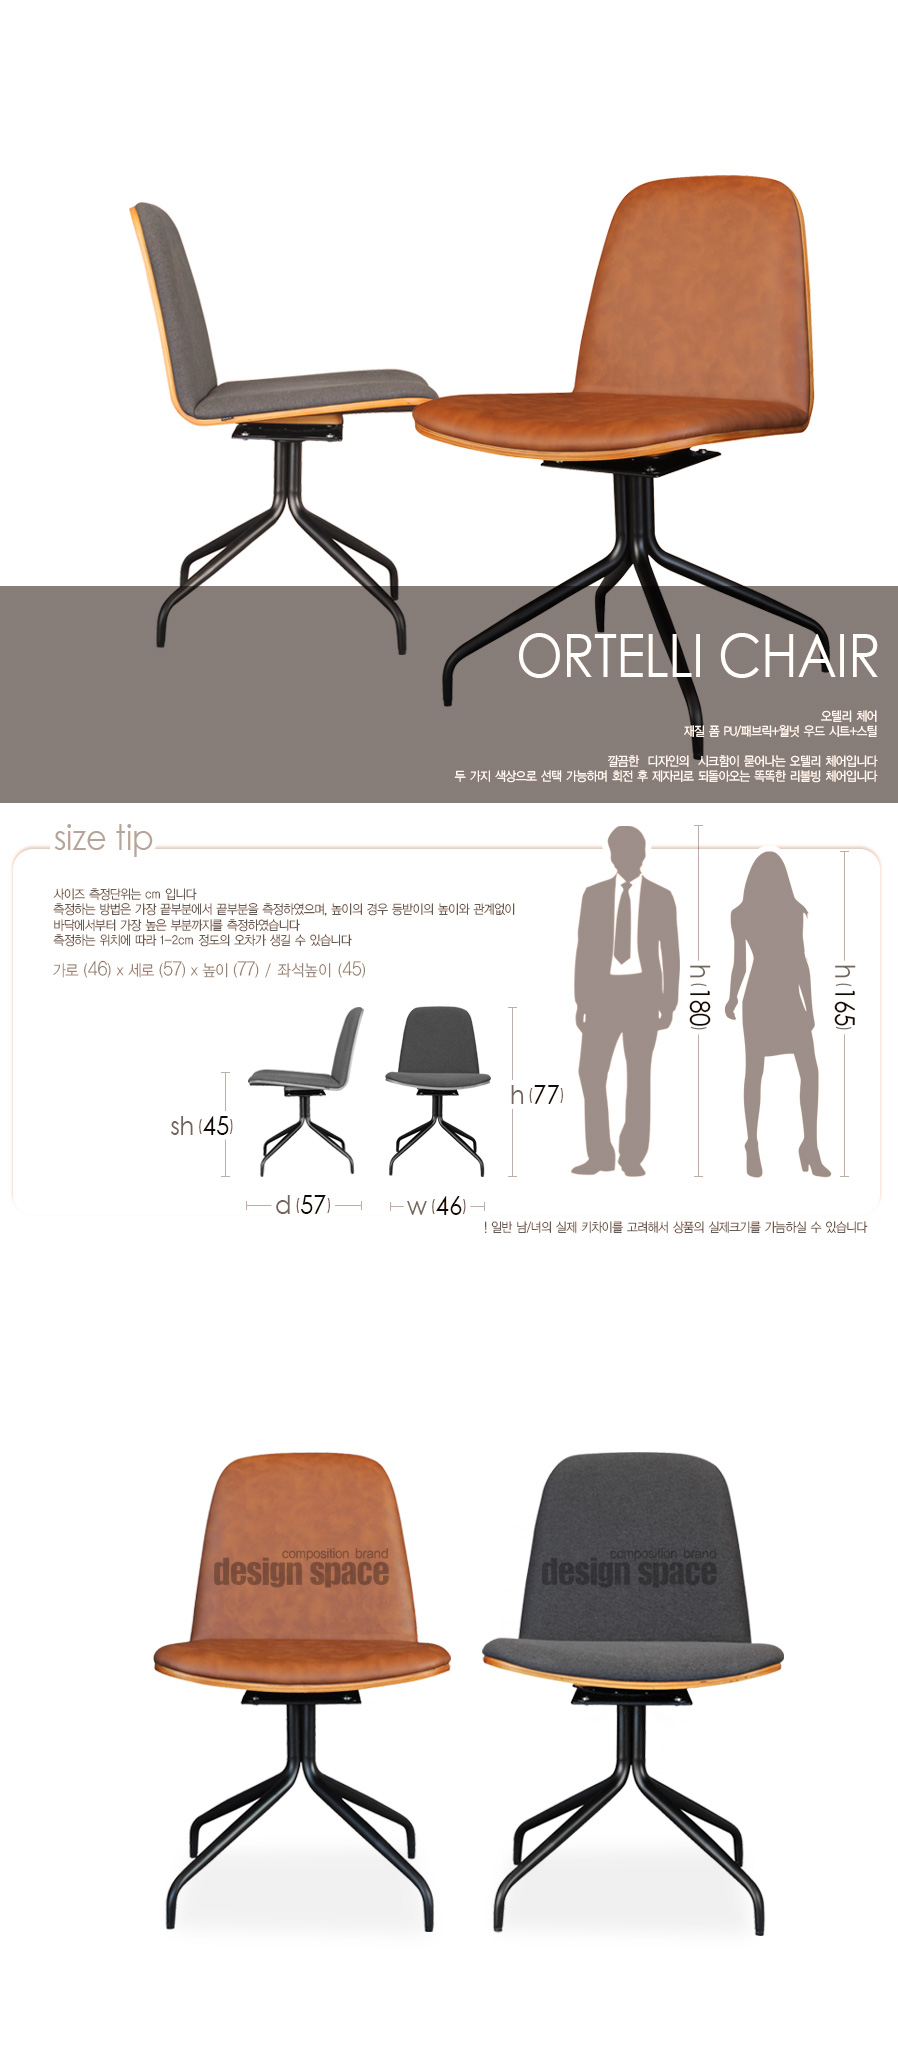 ortelli-chair_01.jpg